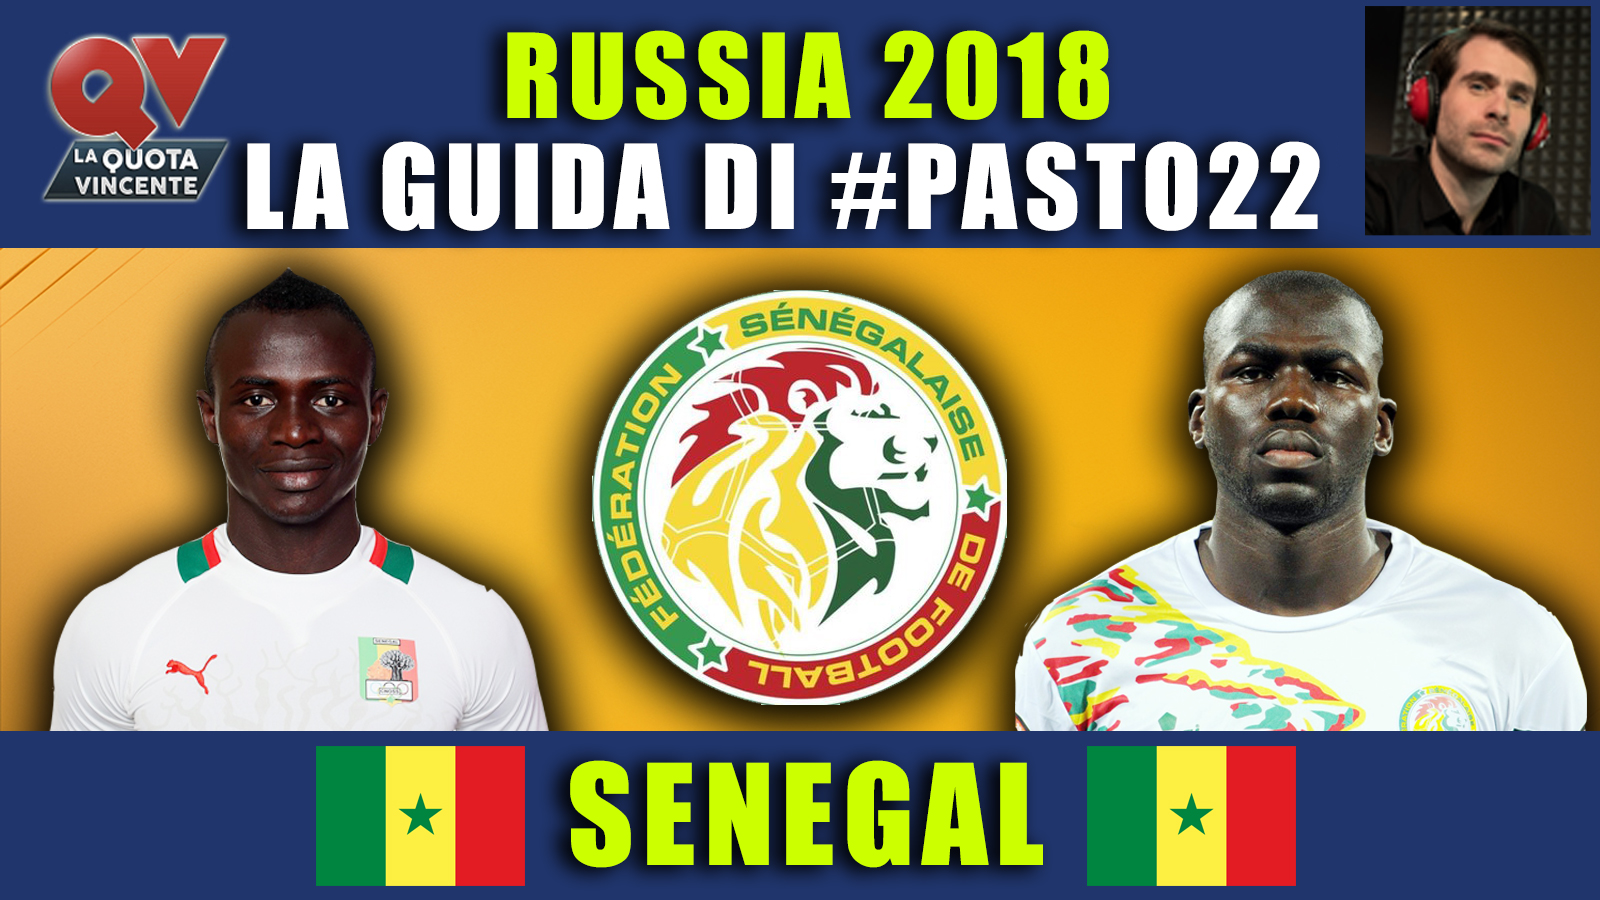 Guida Mondiali Russia 2018 Senegal